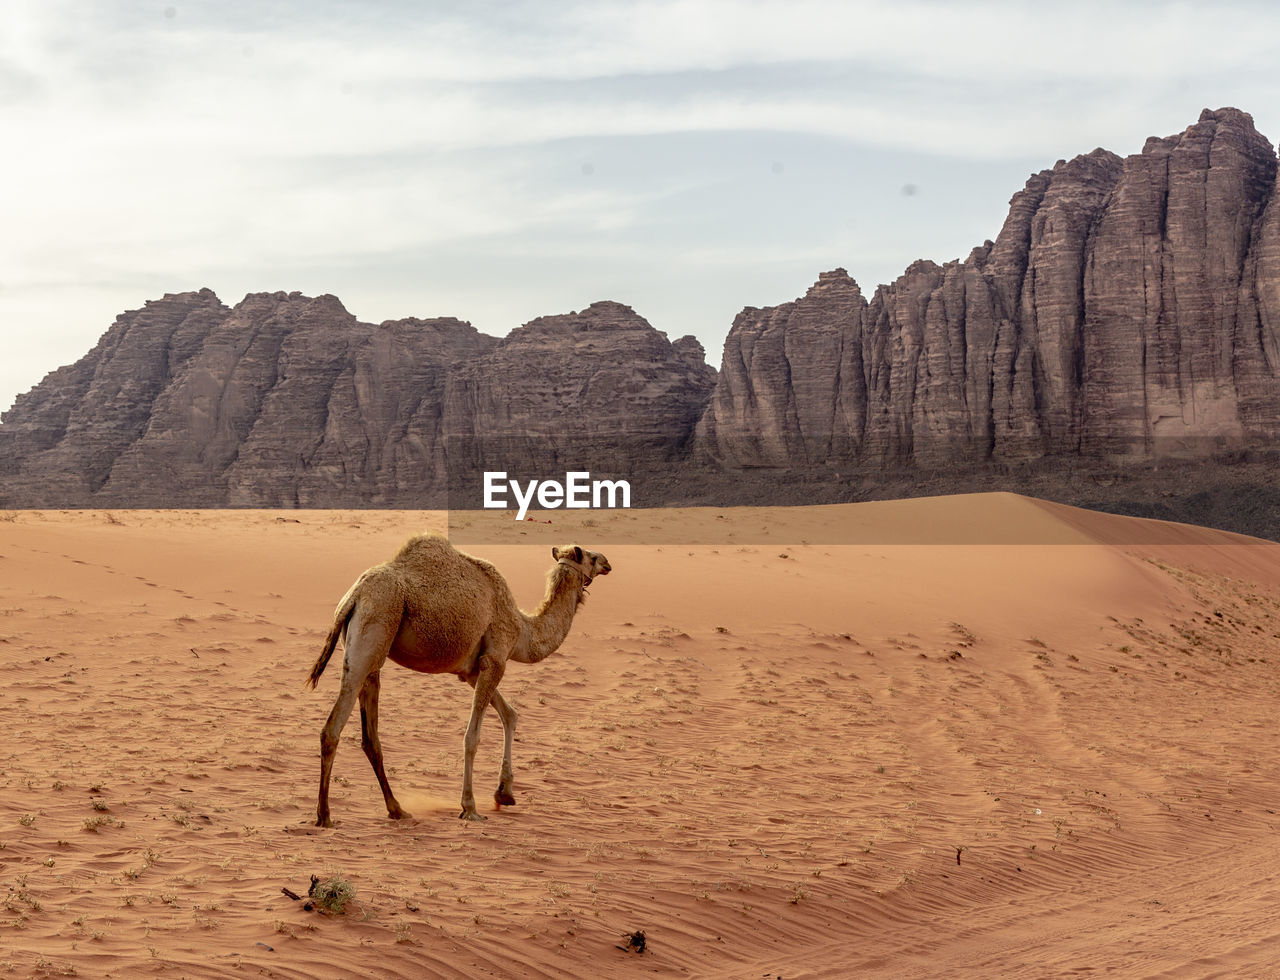 HORSE IN A DESERT